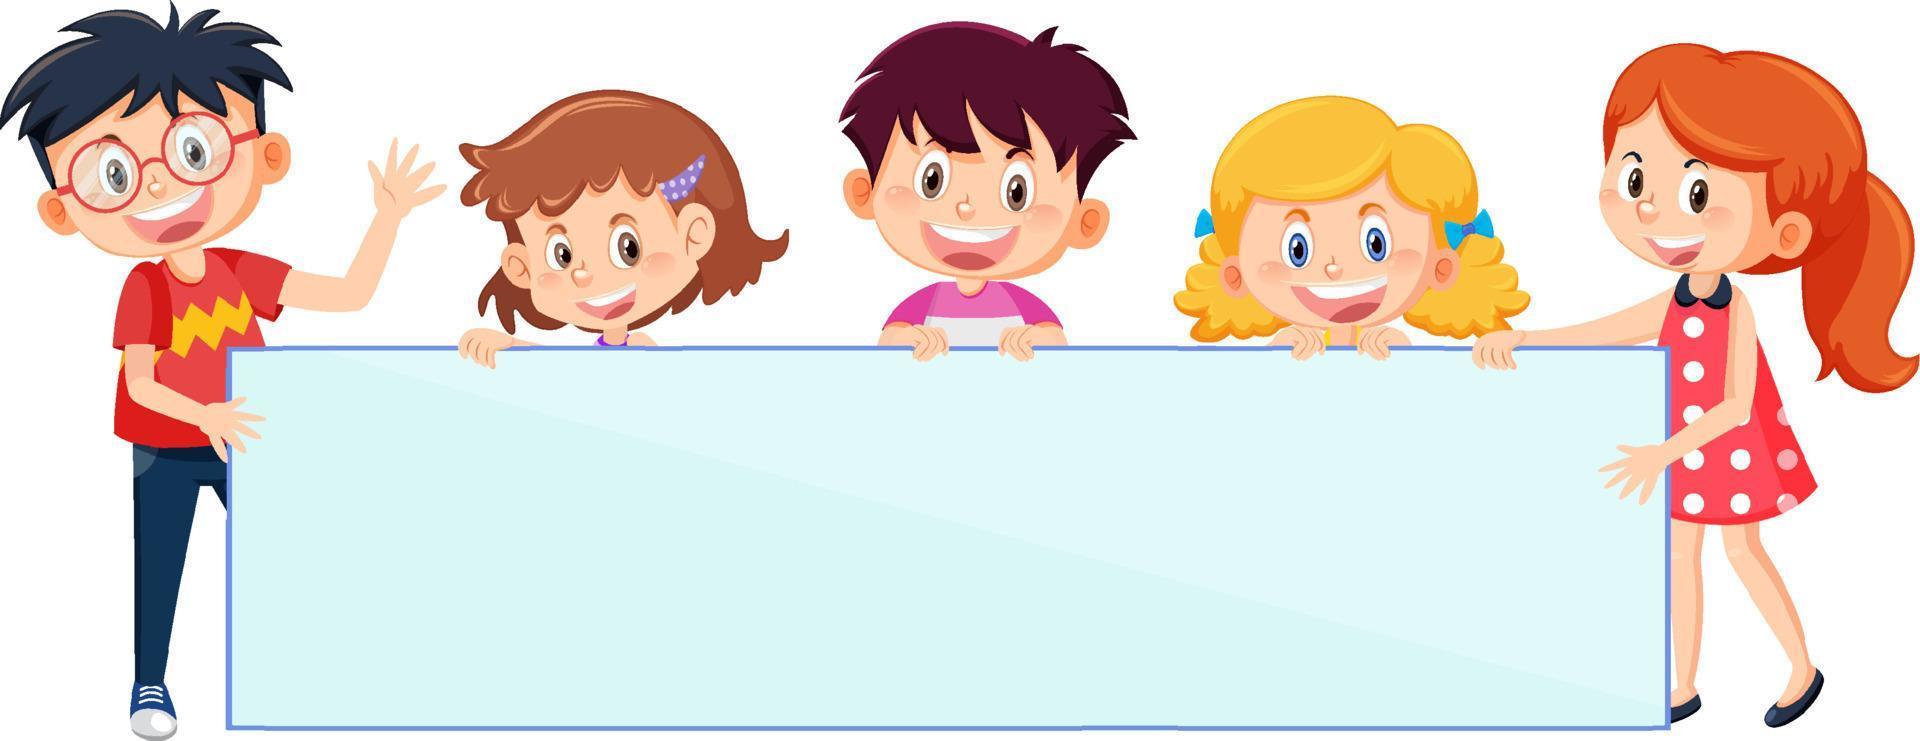 Kinder mit leerem Brett im Cartoon-Stil vektor